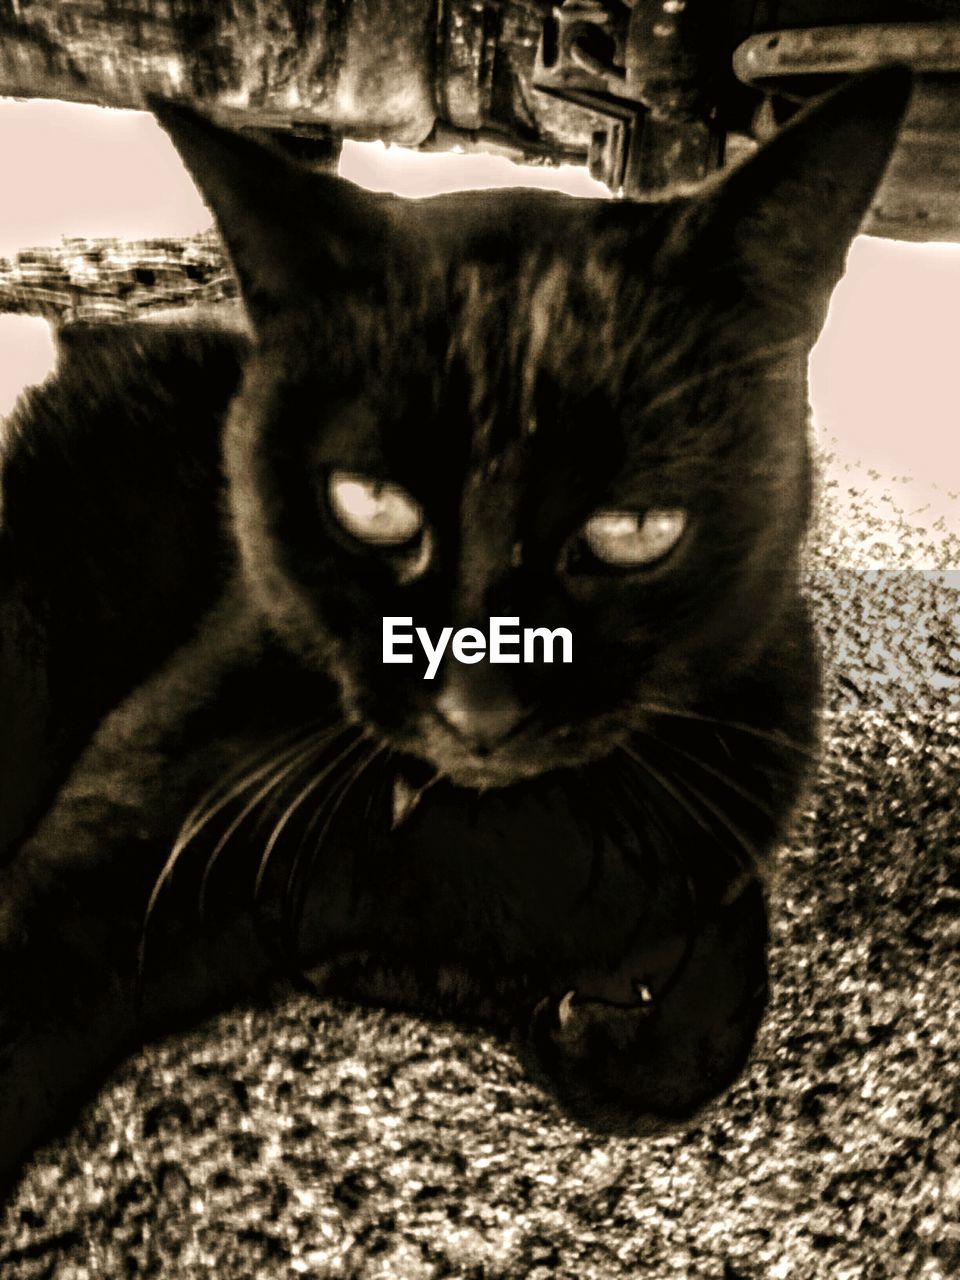 PORTRAIT OF BLACK CAT